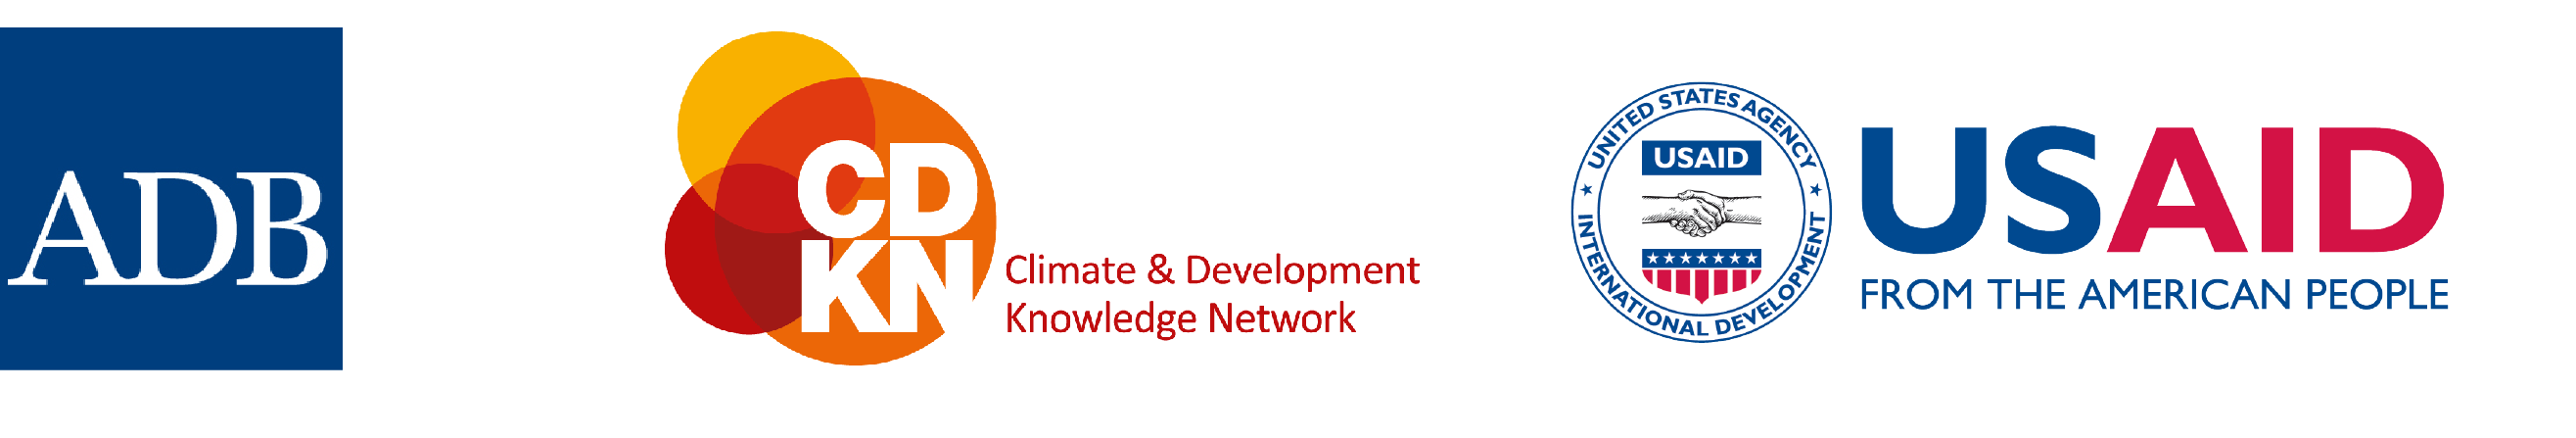 Logos of ADB&lt; CDKN, and USAID